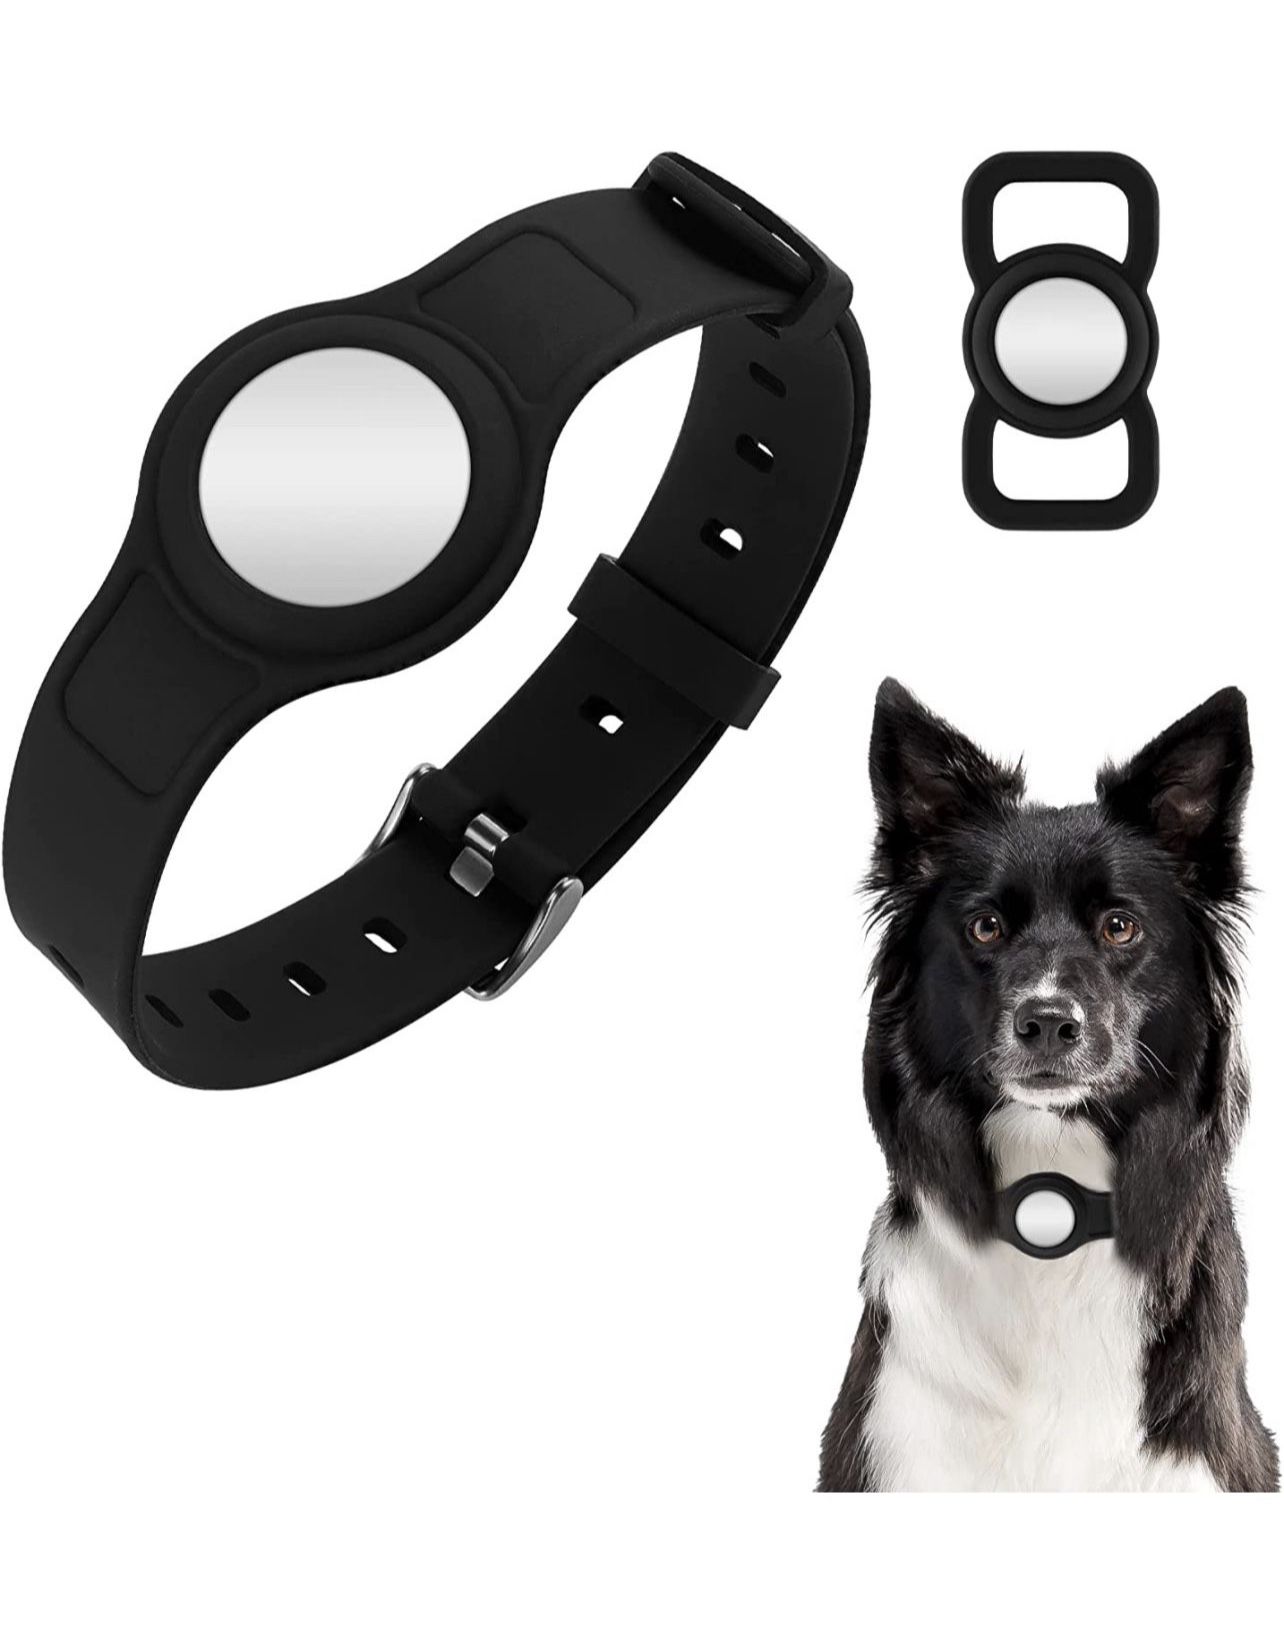 Brandnew Waterproof Dog Collar for AirTag & AirTag Loop Holder Bundle